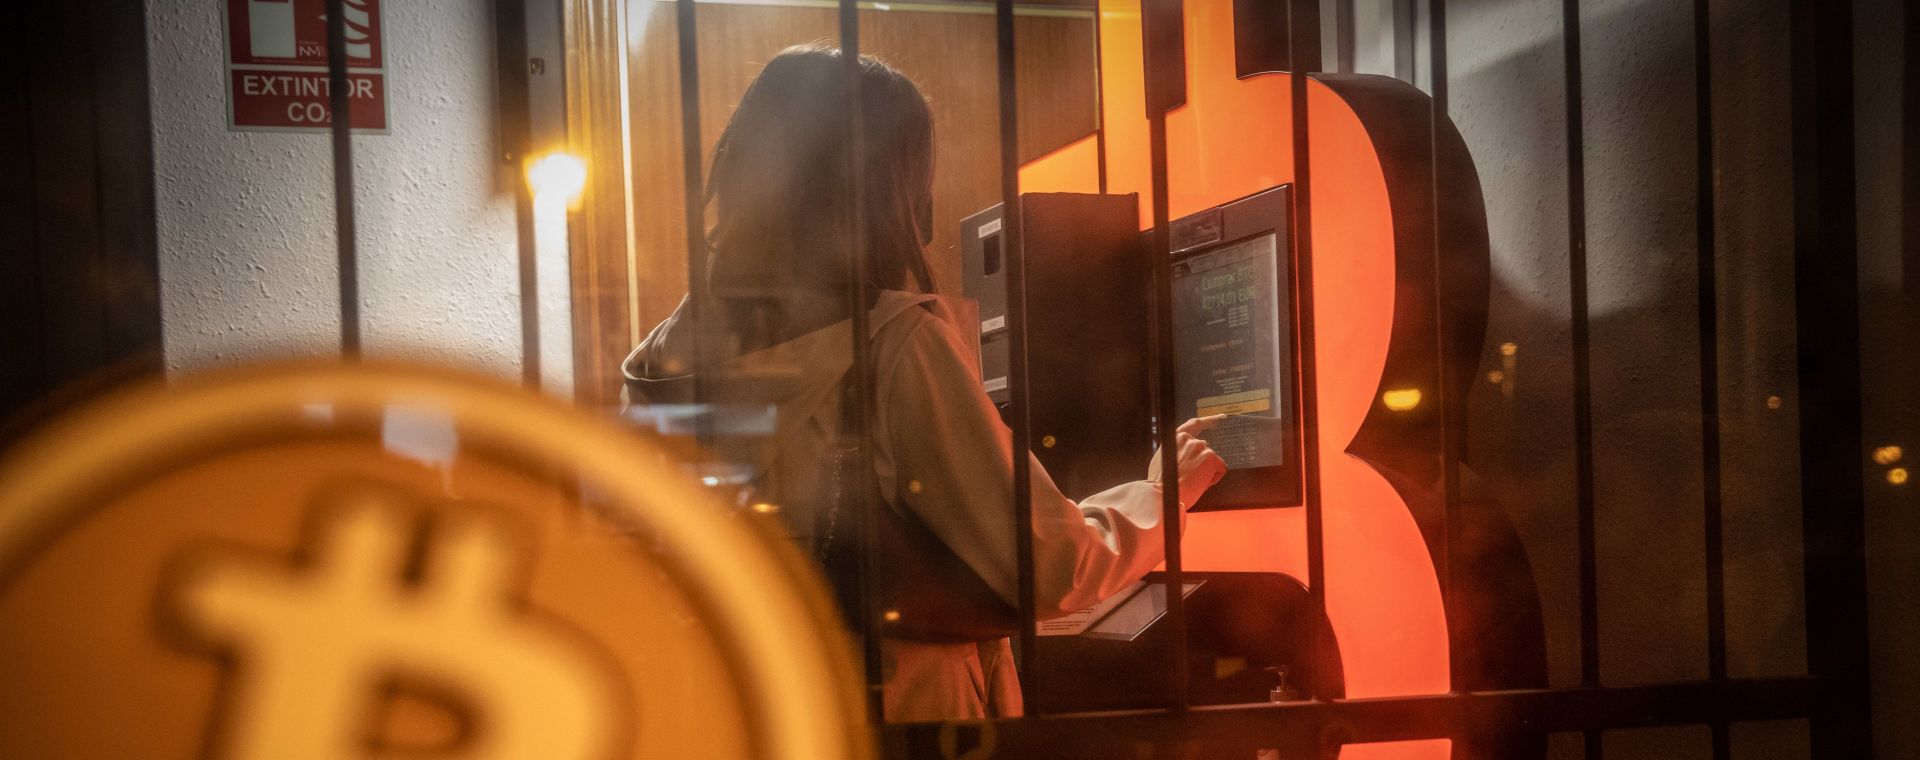 Seorang pelanggan menggunakan mesin anjungan tunai mandiri (ATM) Bitcoin di kios Barcelona, Spanyol, pada Selasa, 23 Februari 2021.  - Bloomberg